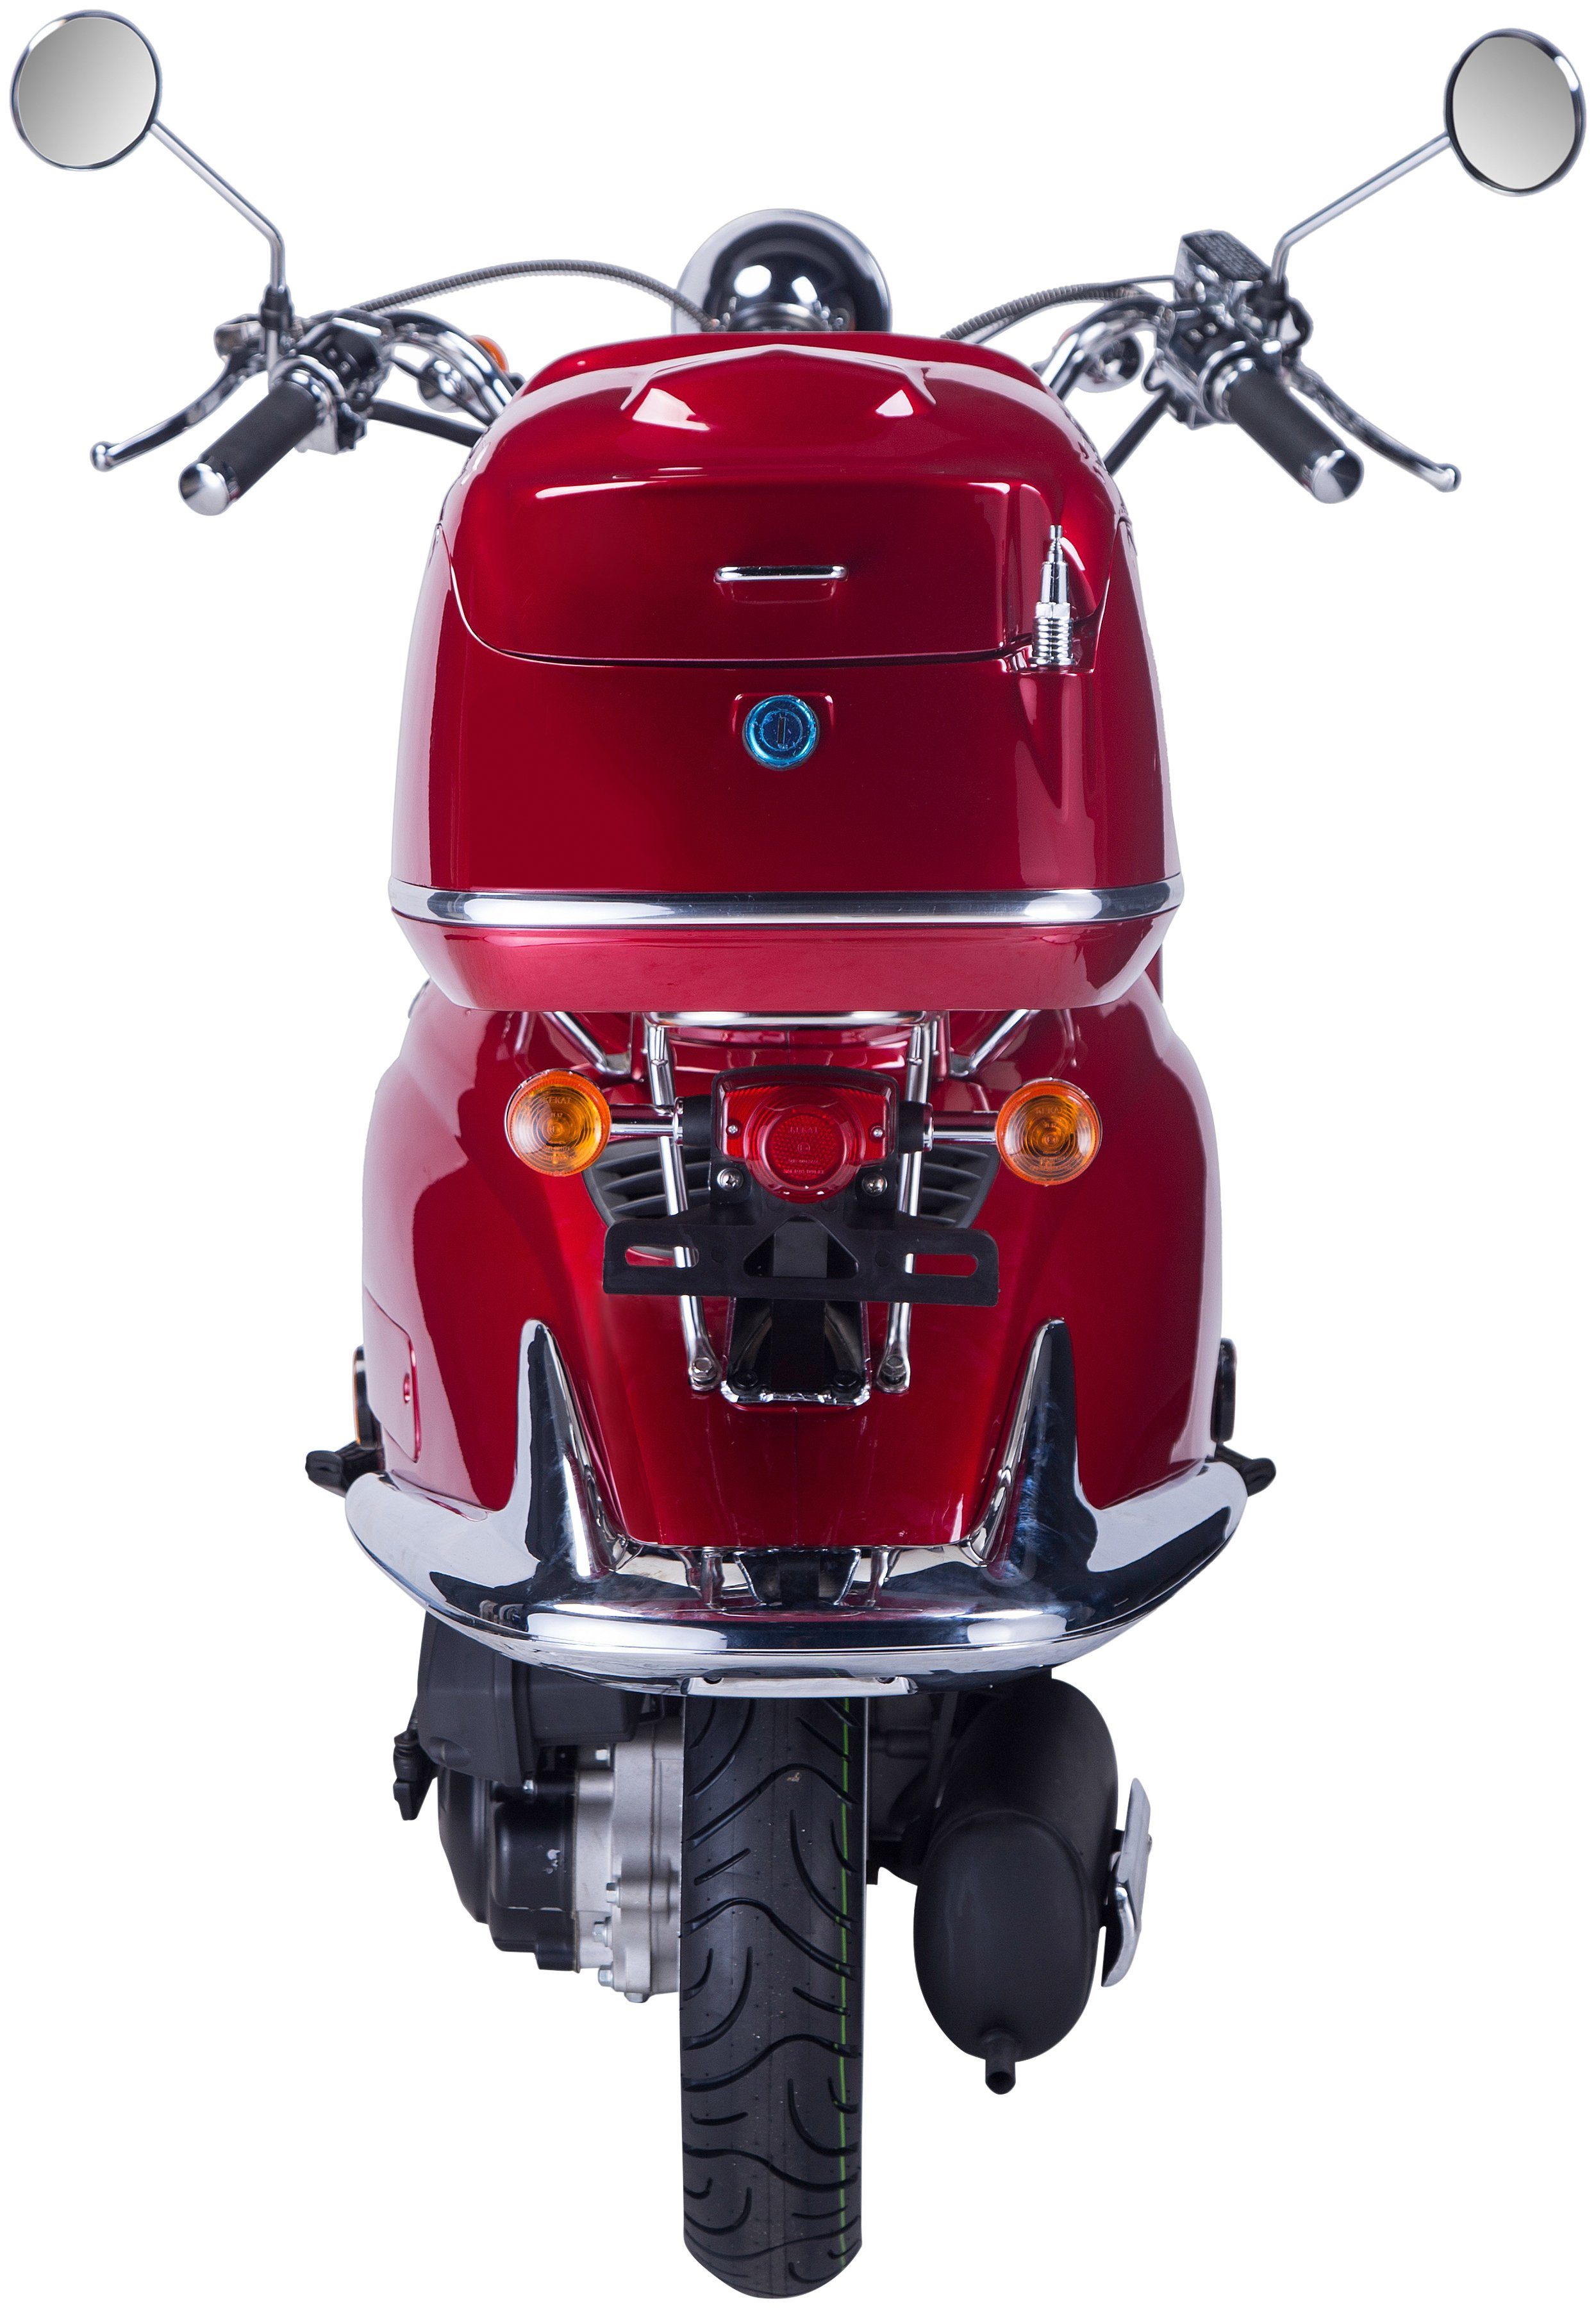 50 Topcase Motorroller rot ccm, 45 5, km/h, (Set), GT UNION Strada, Euro mit